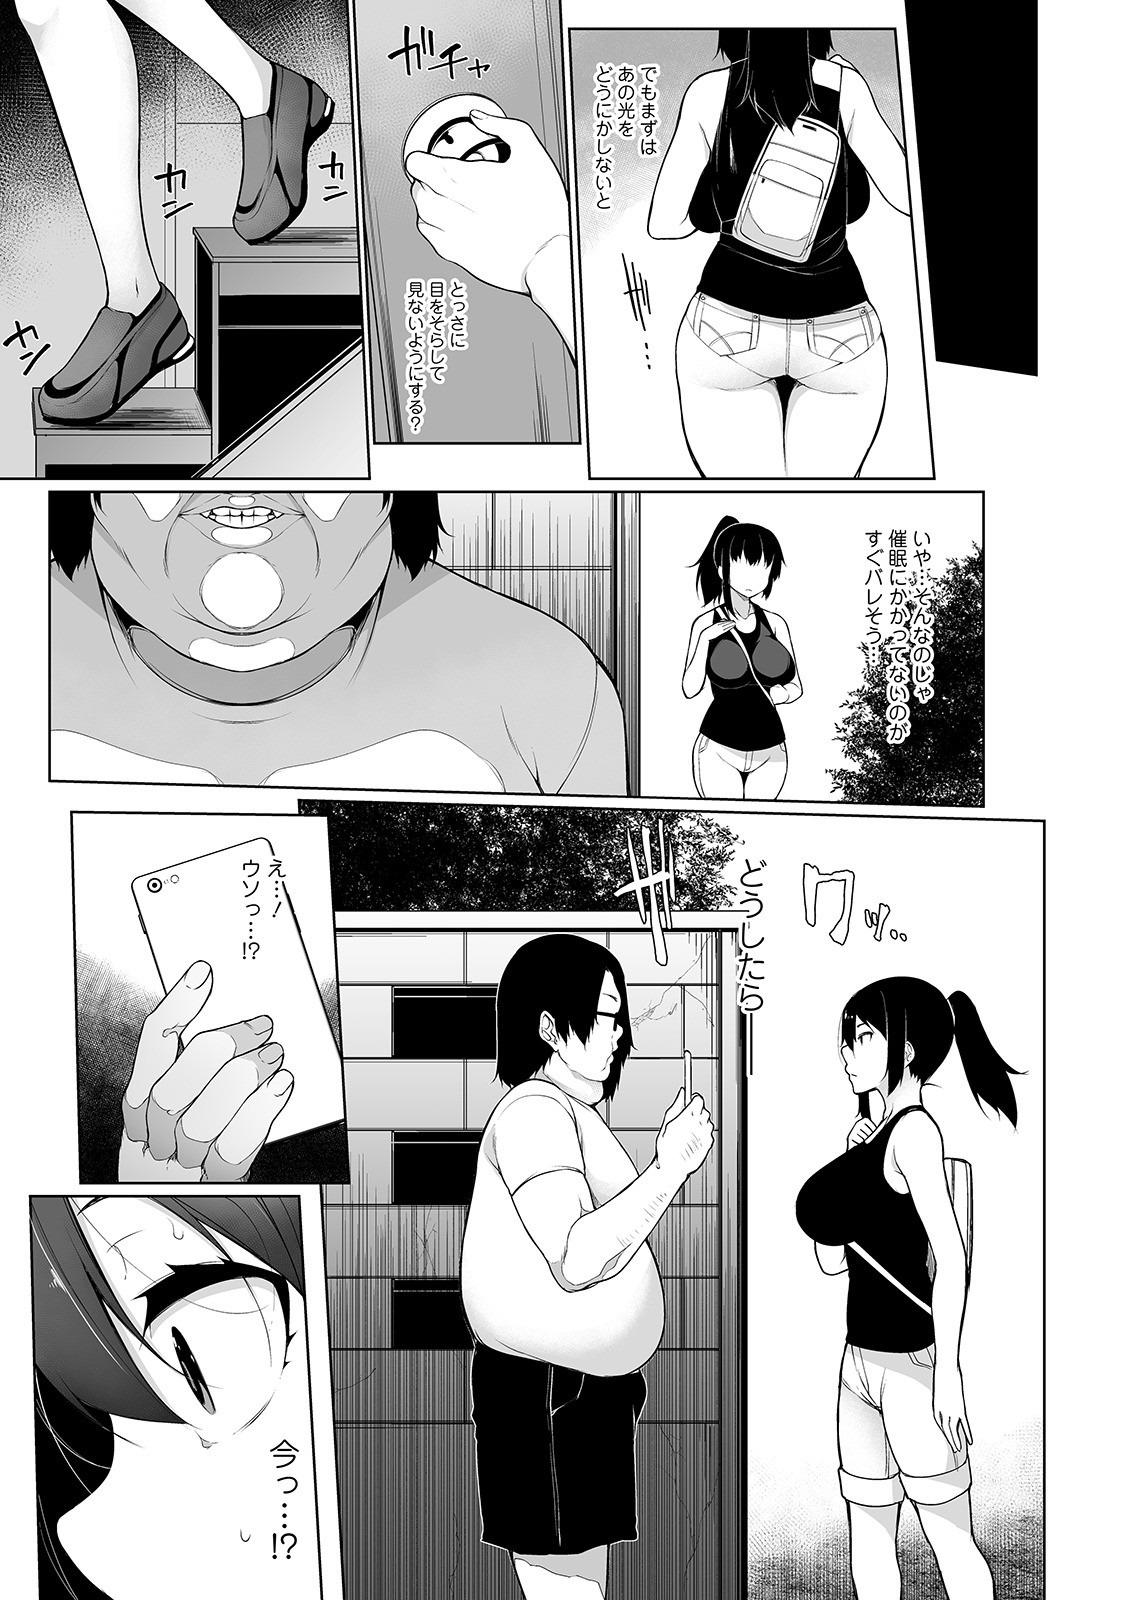 HYPNO BLINK 4 Page 3 Of 24 hentai comic, HYPNO BLINK 4 Page 3 Of 24 hentai doujinshi...